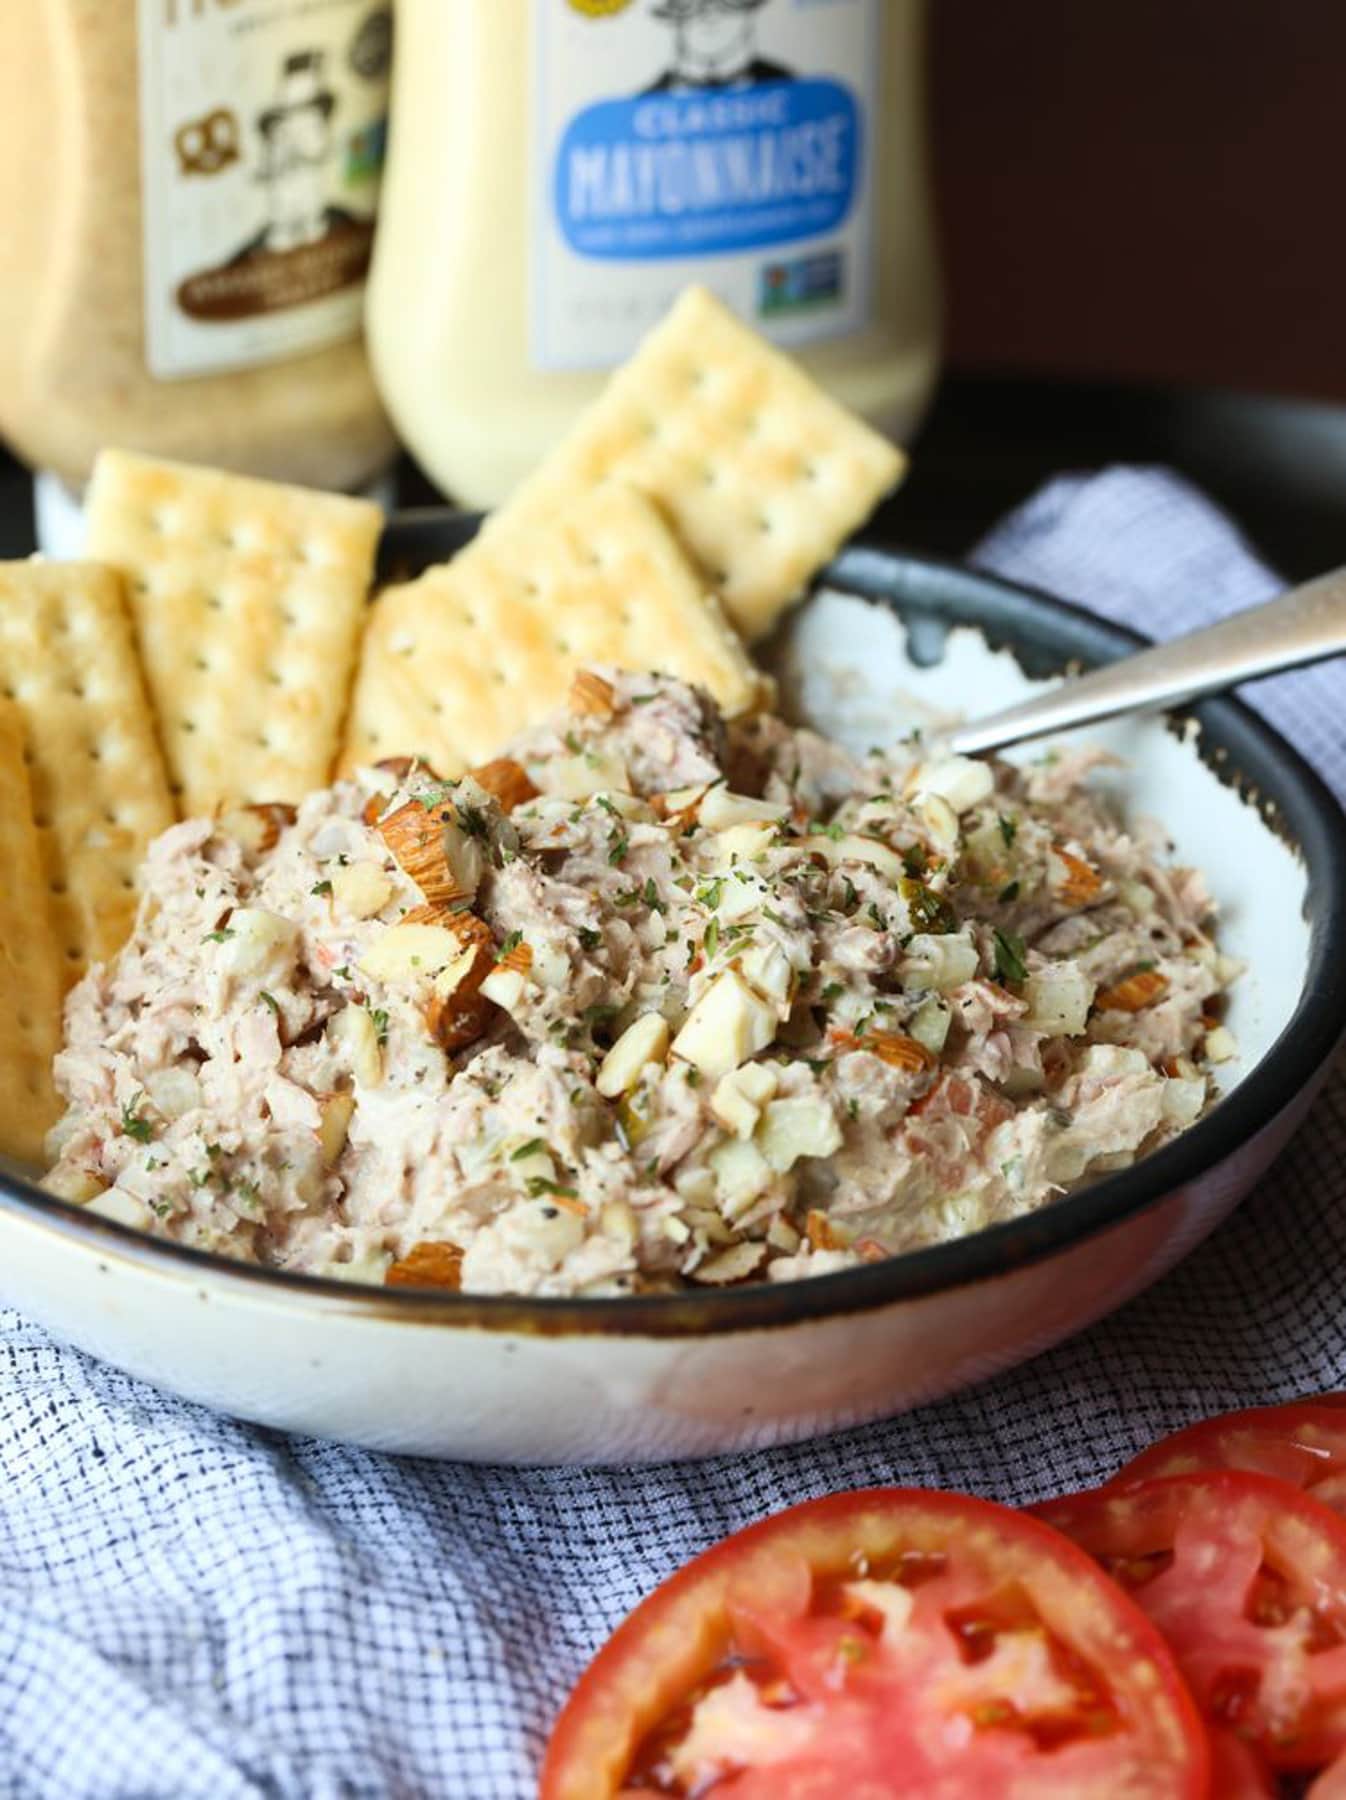 Tuna Salad with crackers